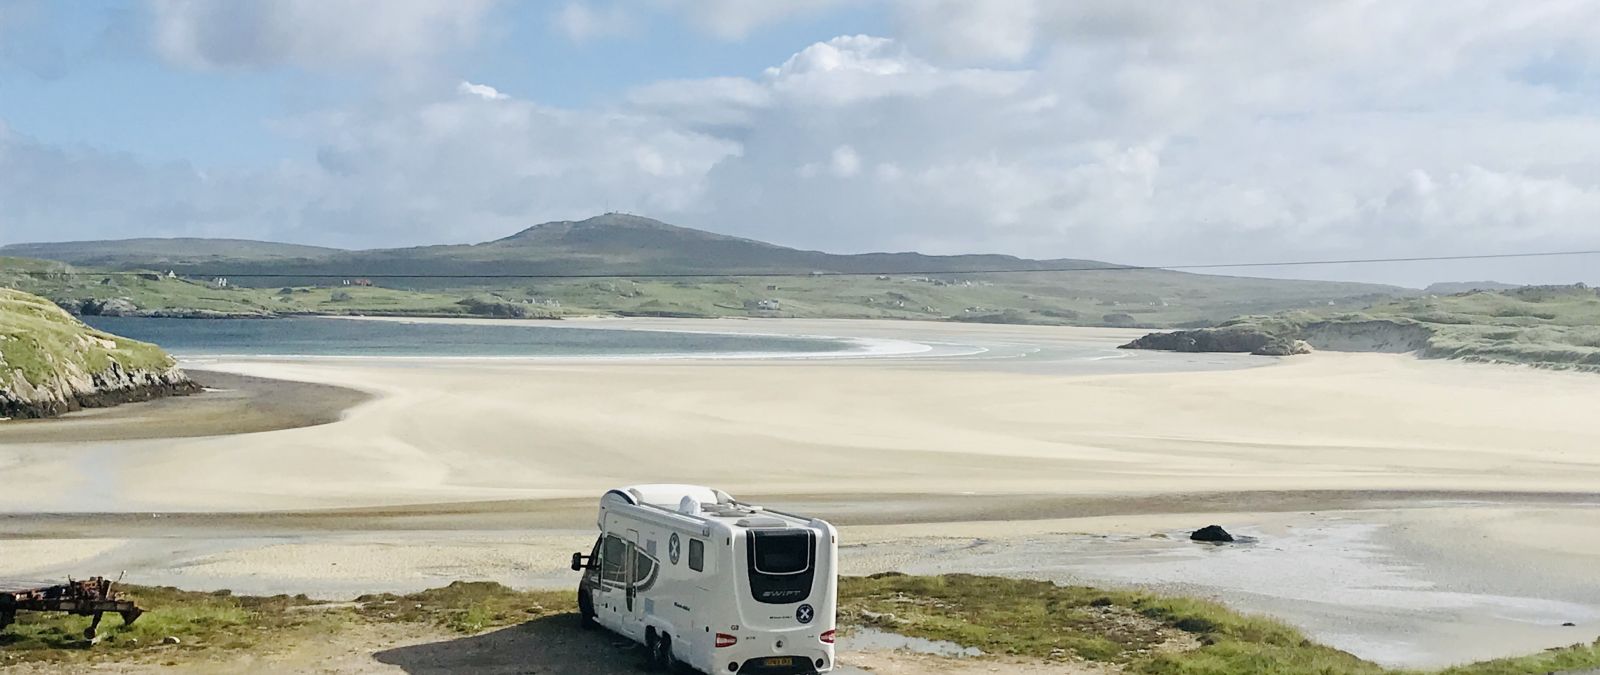 Scottish Tourer Motorohme parked on the beach